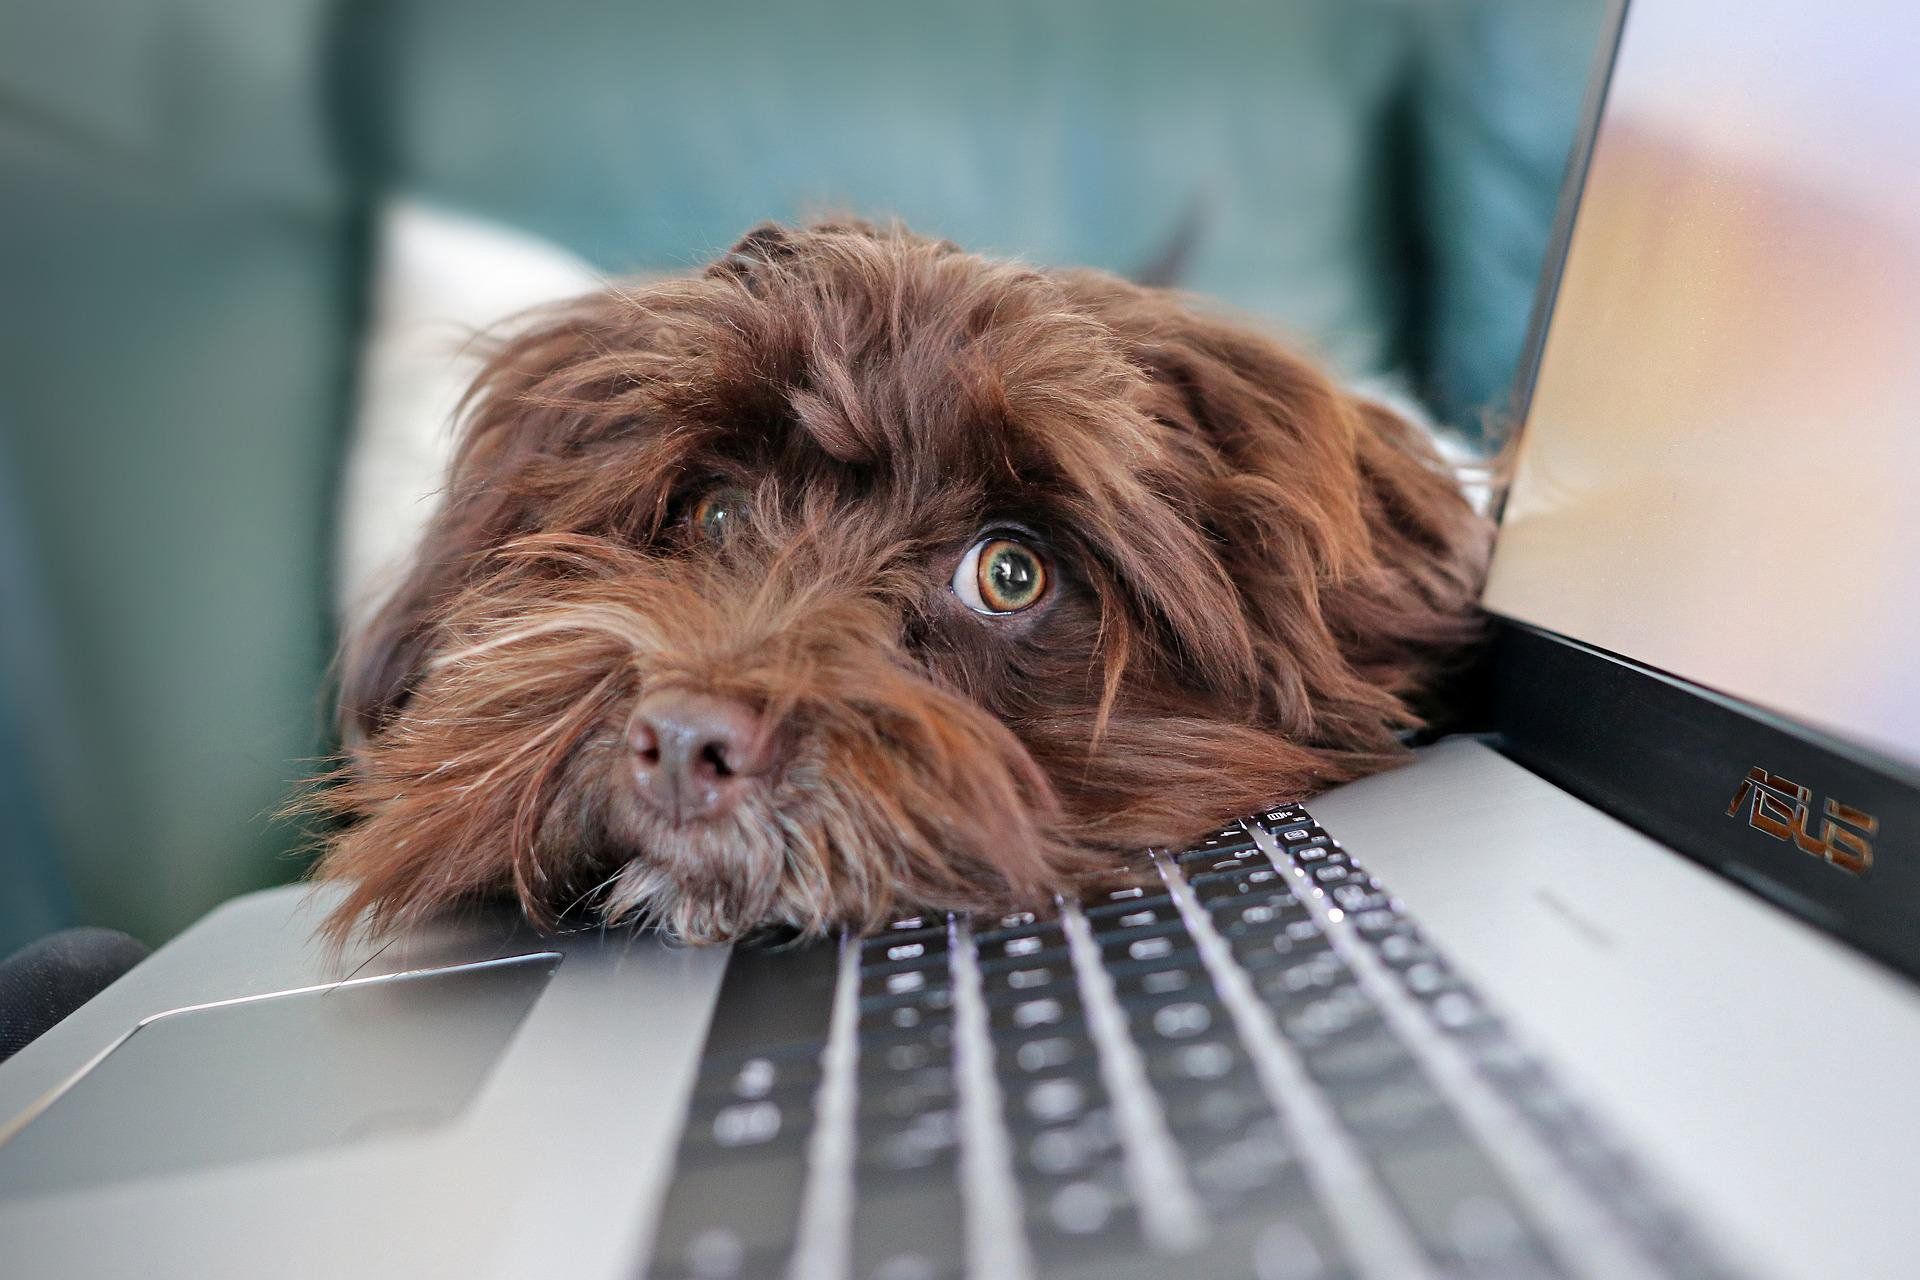 Dog on keyboard